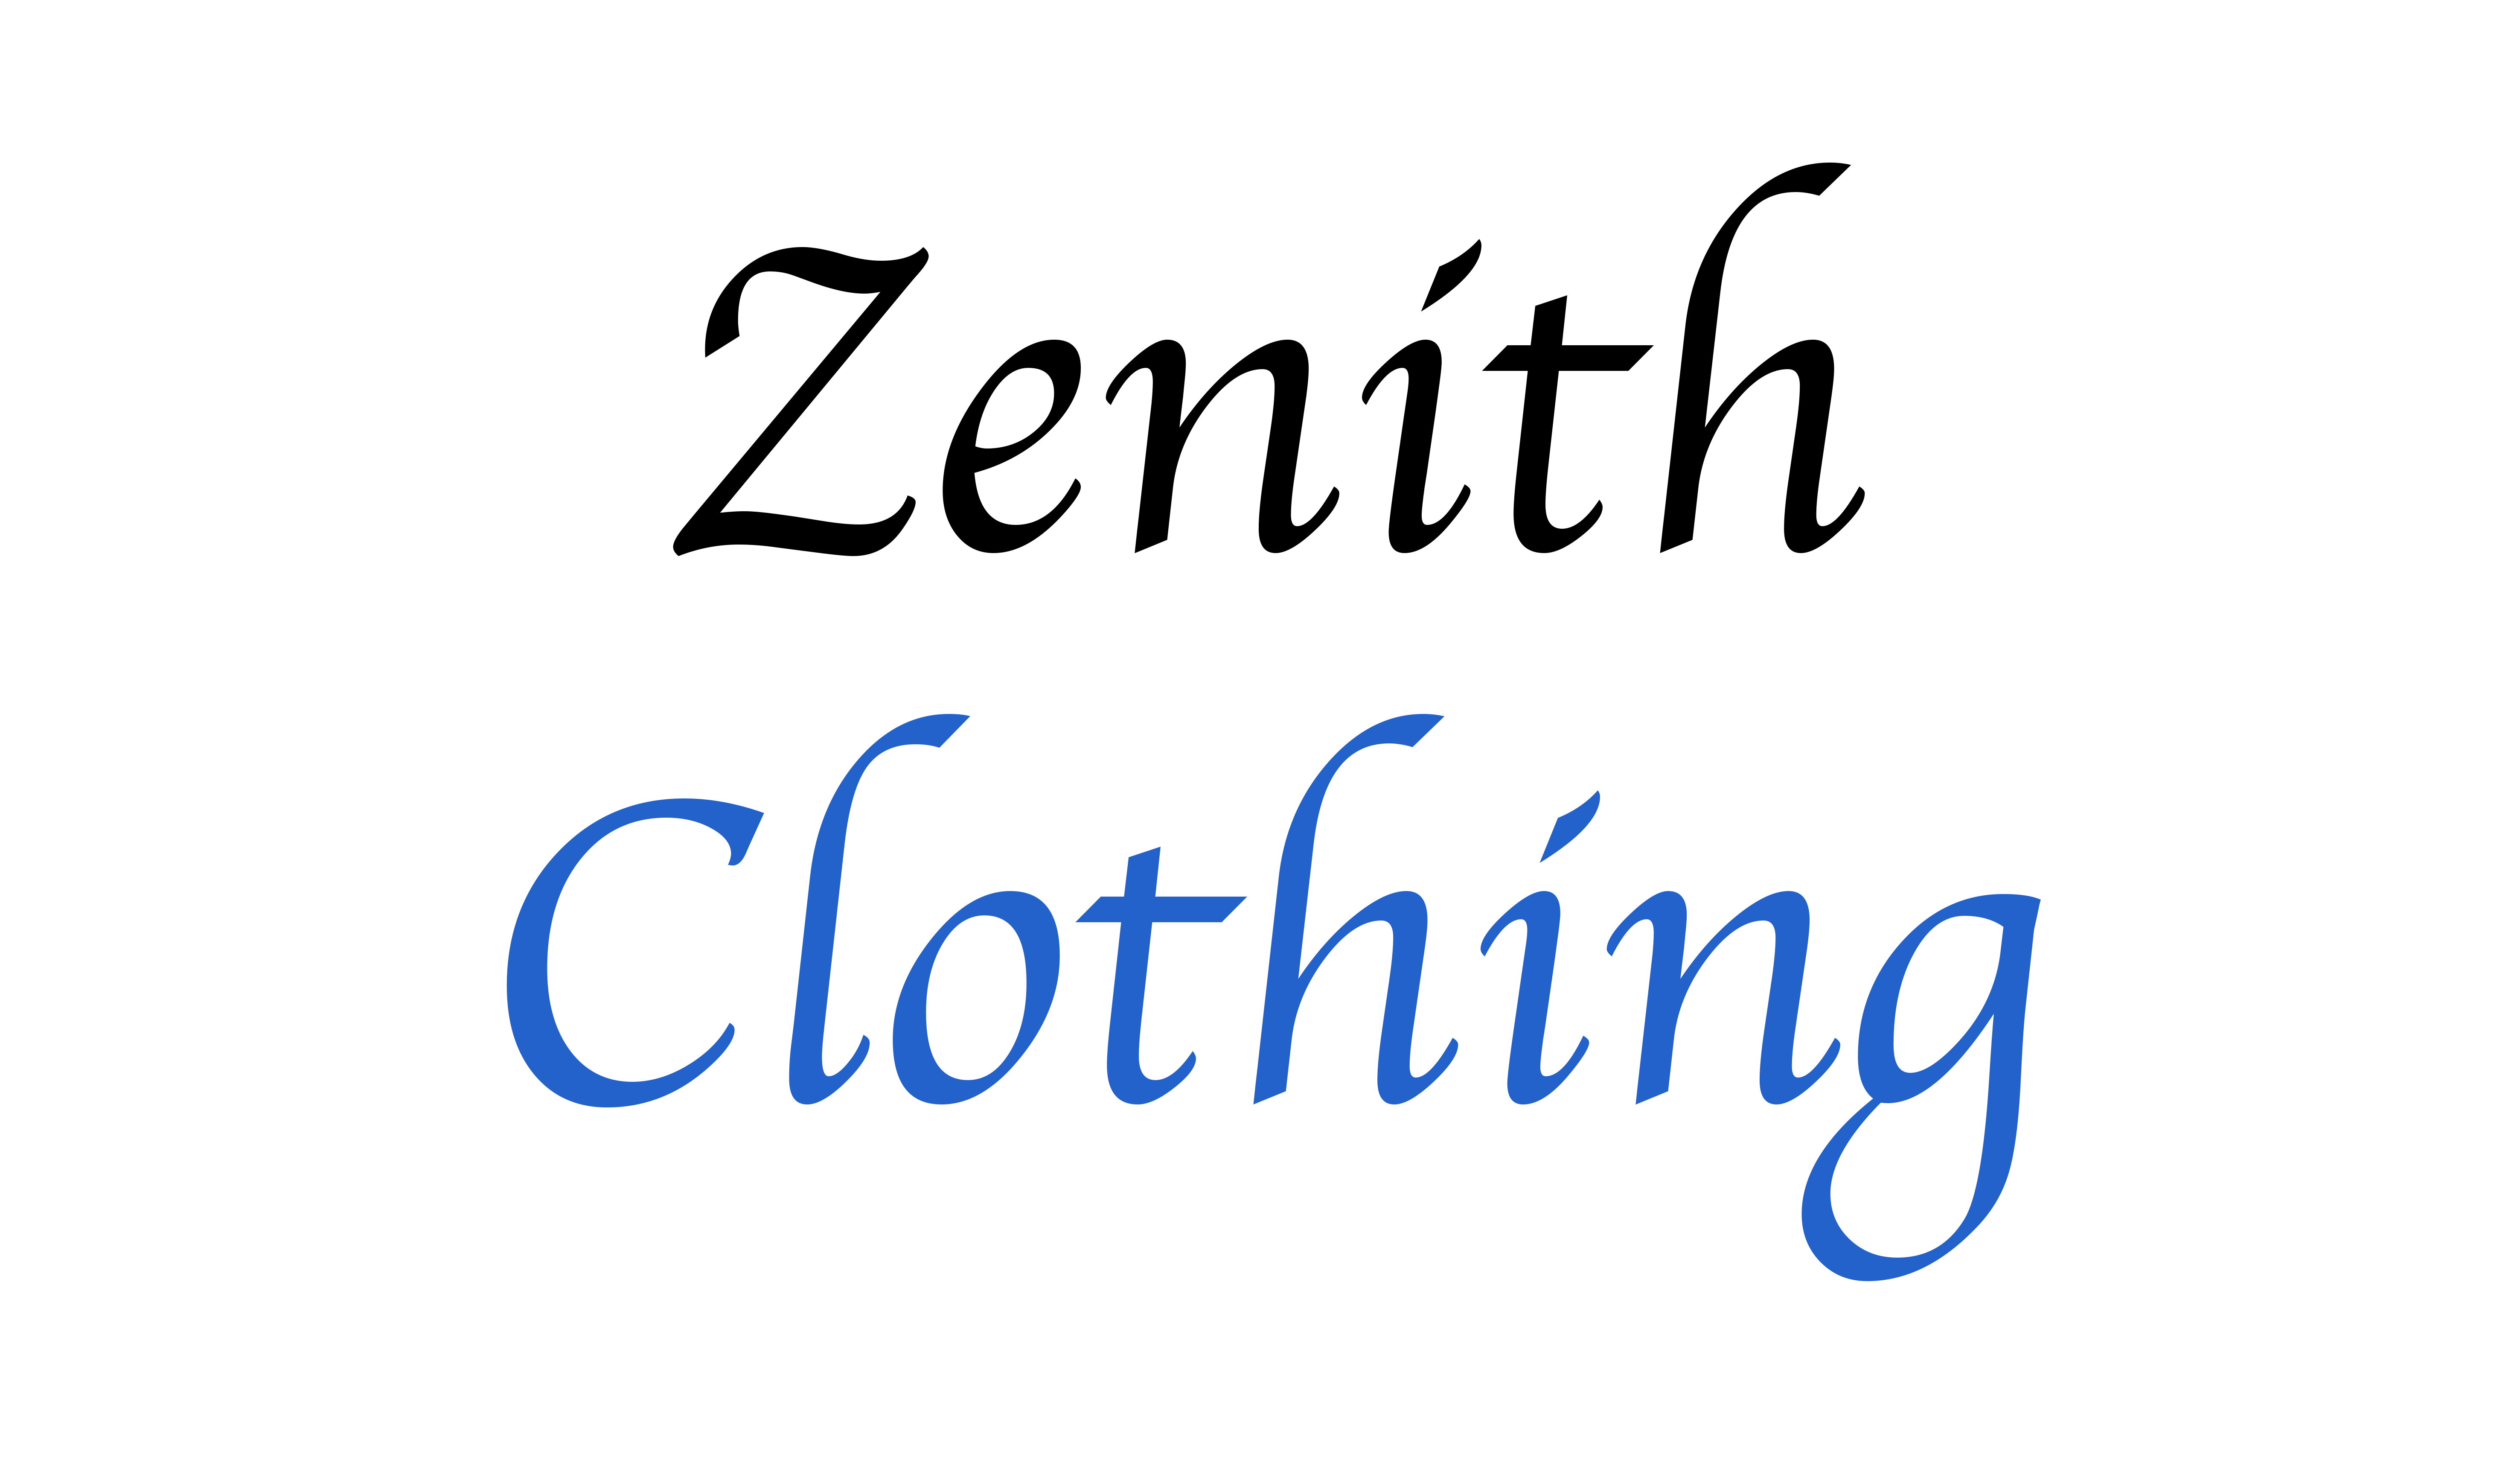 Zenith Clothing